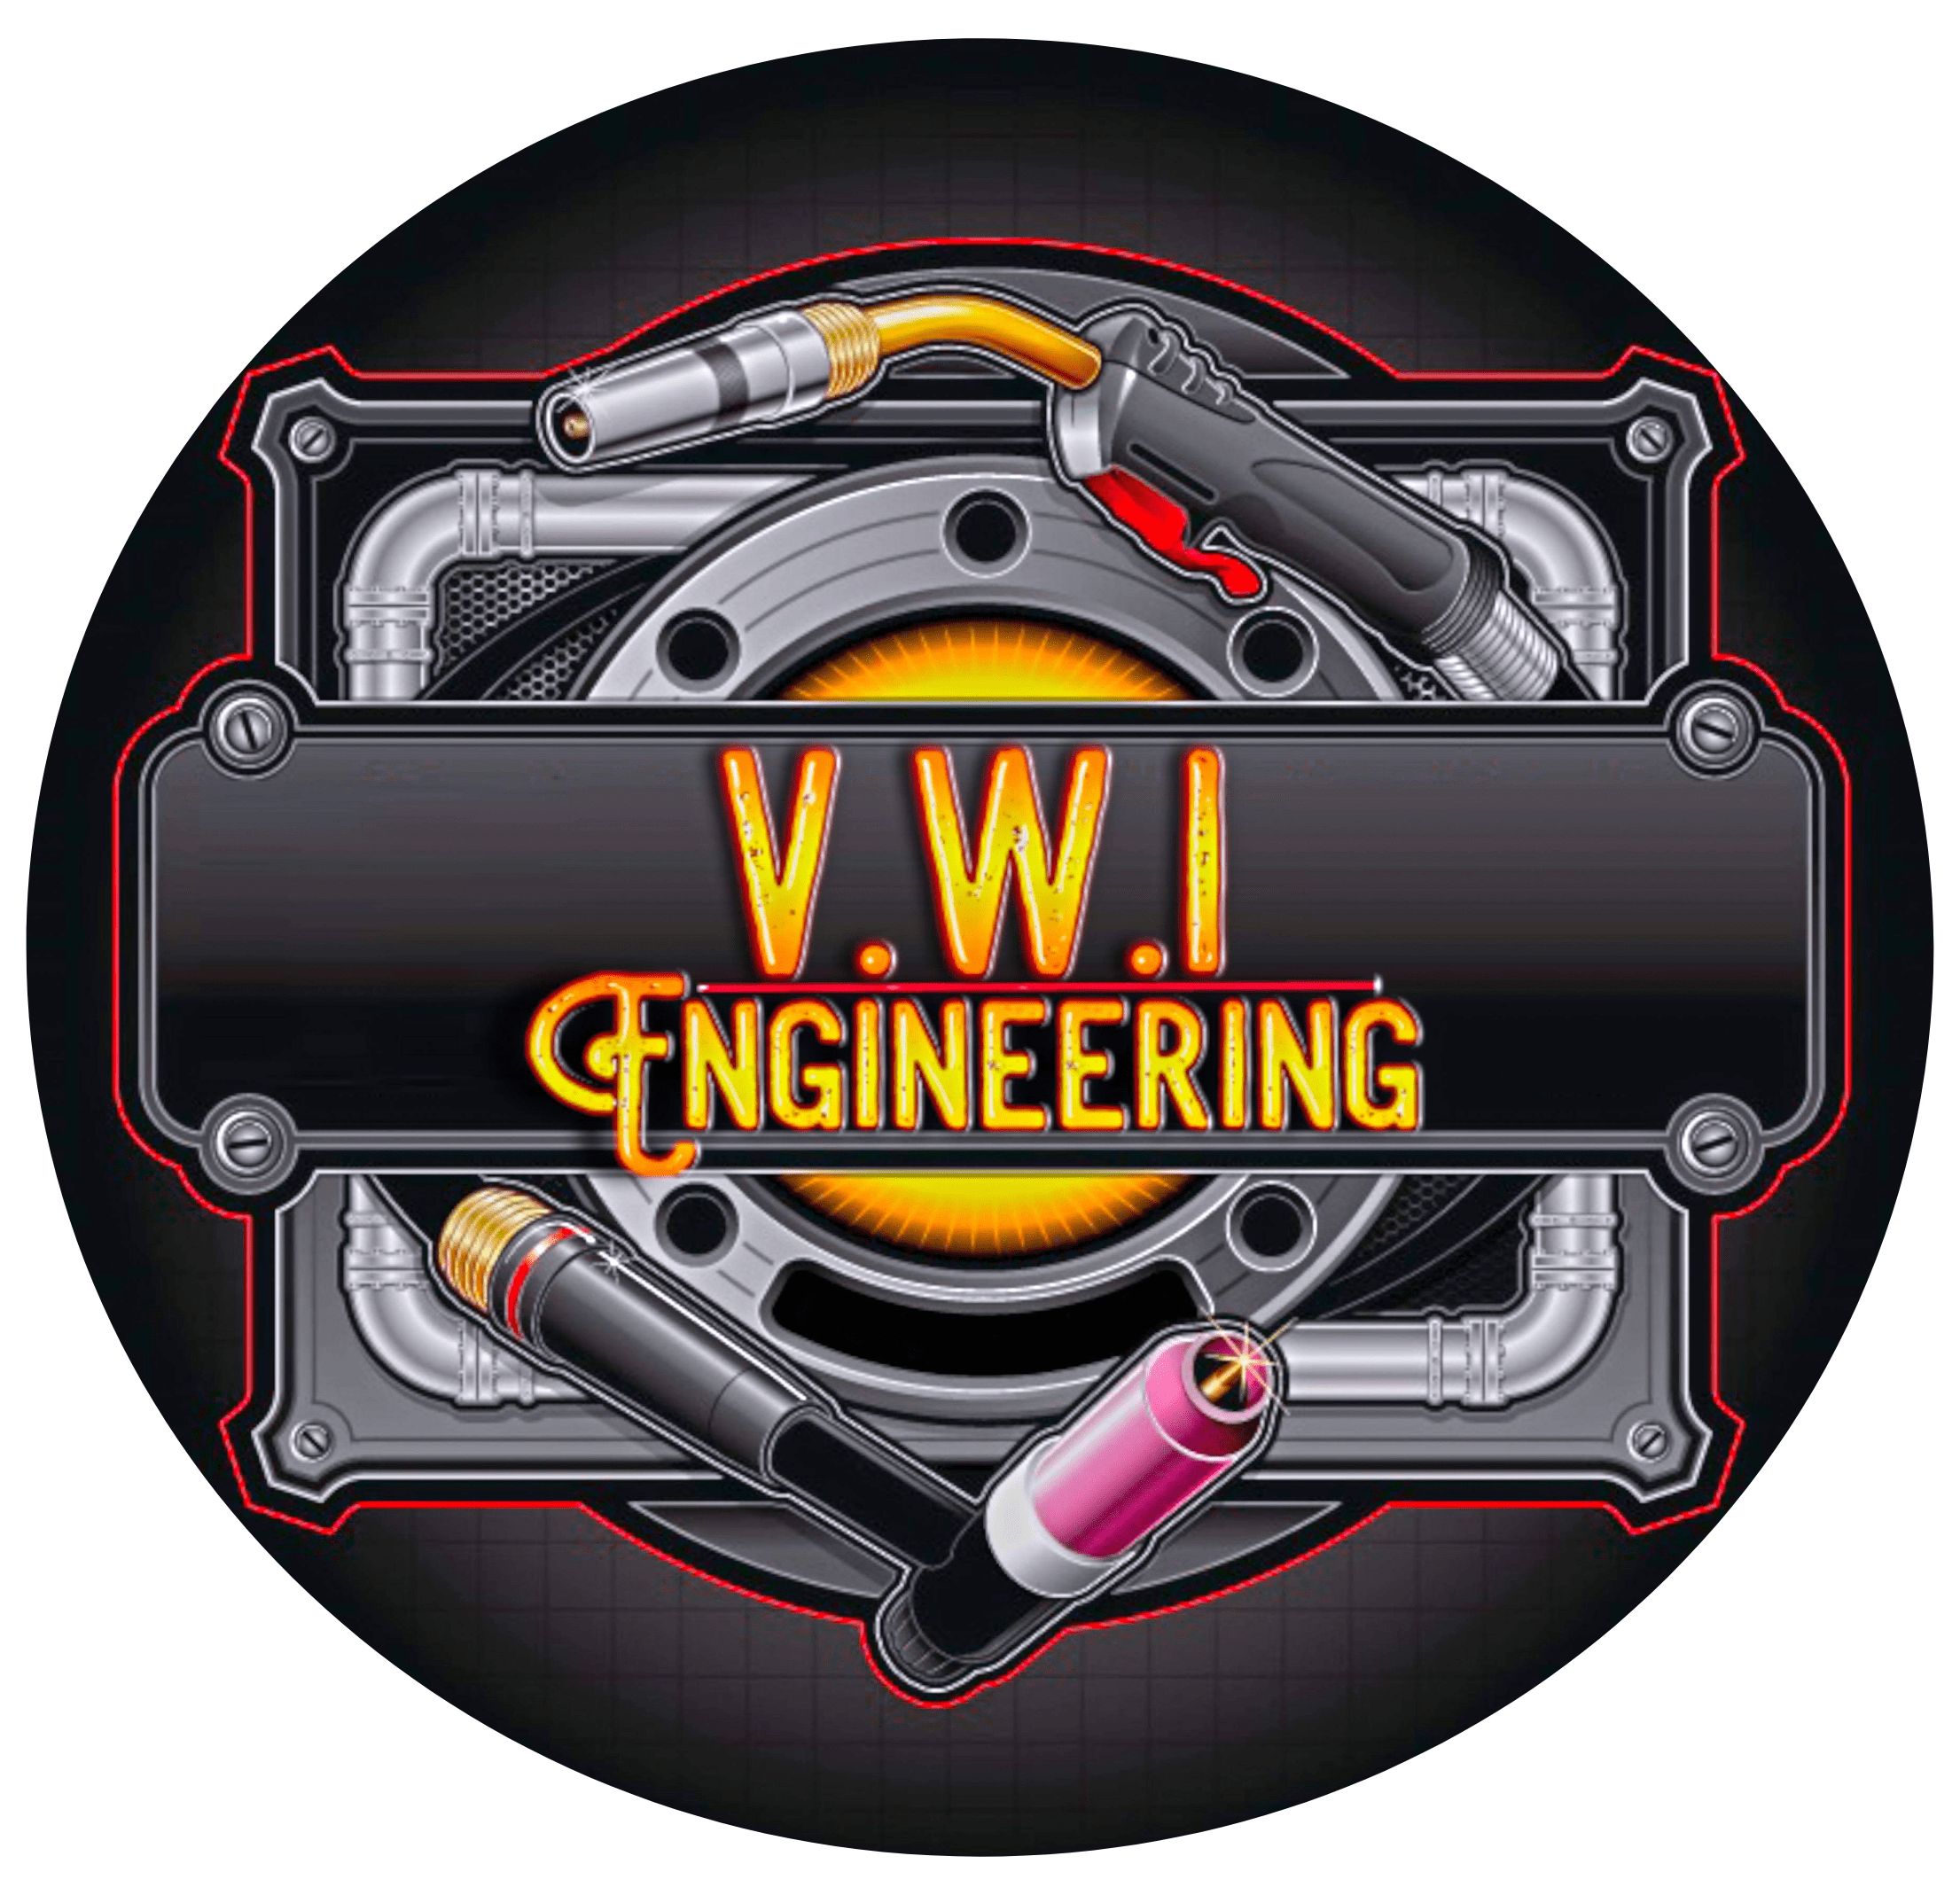 VWI Engineering (Automated Driveway Gates, Railings, Balustrade)